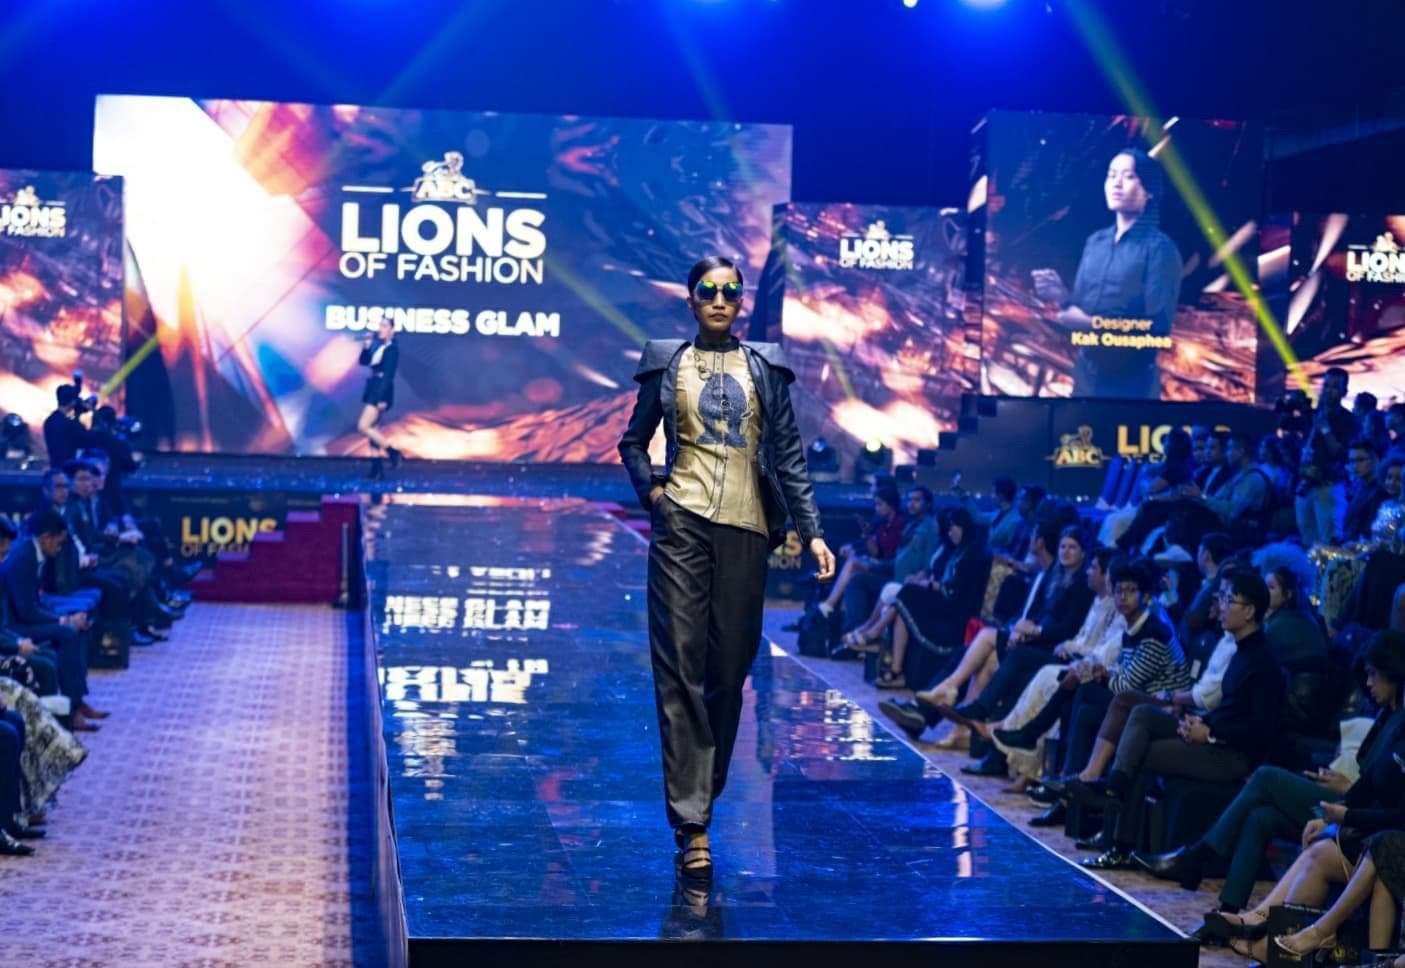 Sreypov en train de défiler lors de la Lions of Fashion